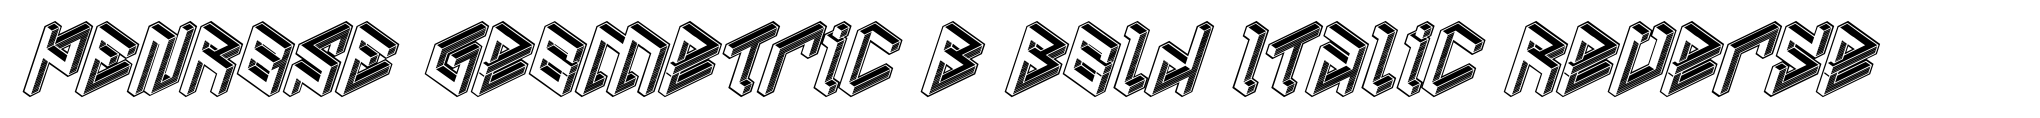 PENROSE Geometric B Bold Italic Reverse image